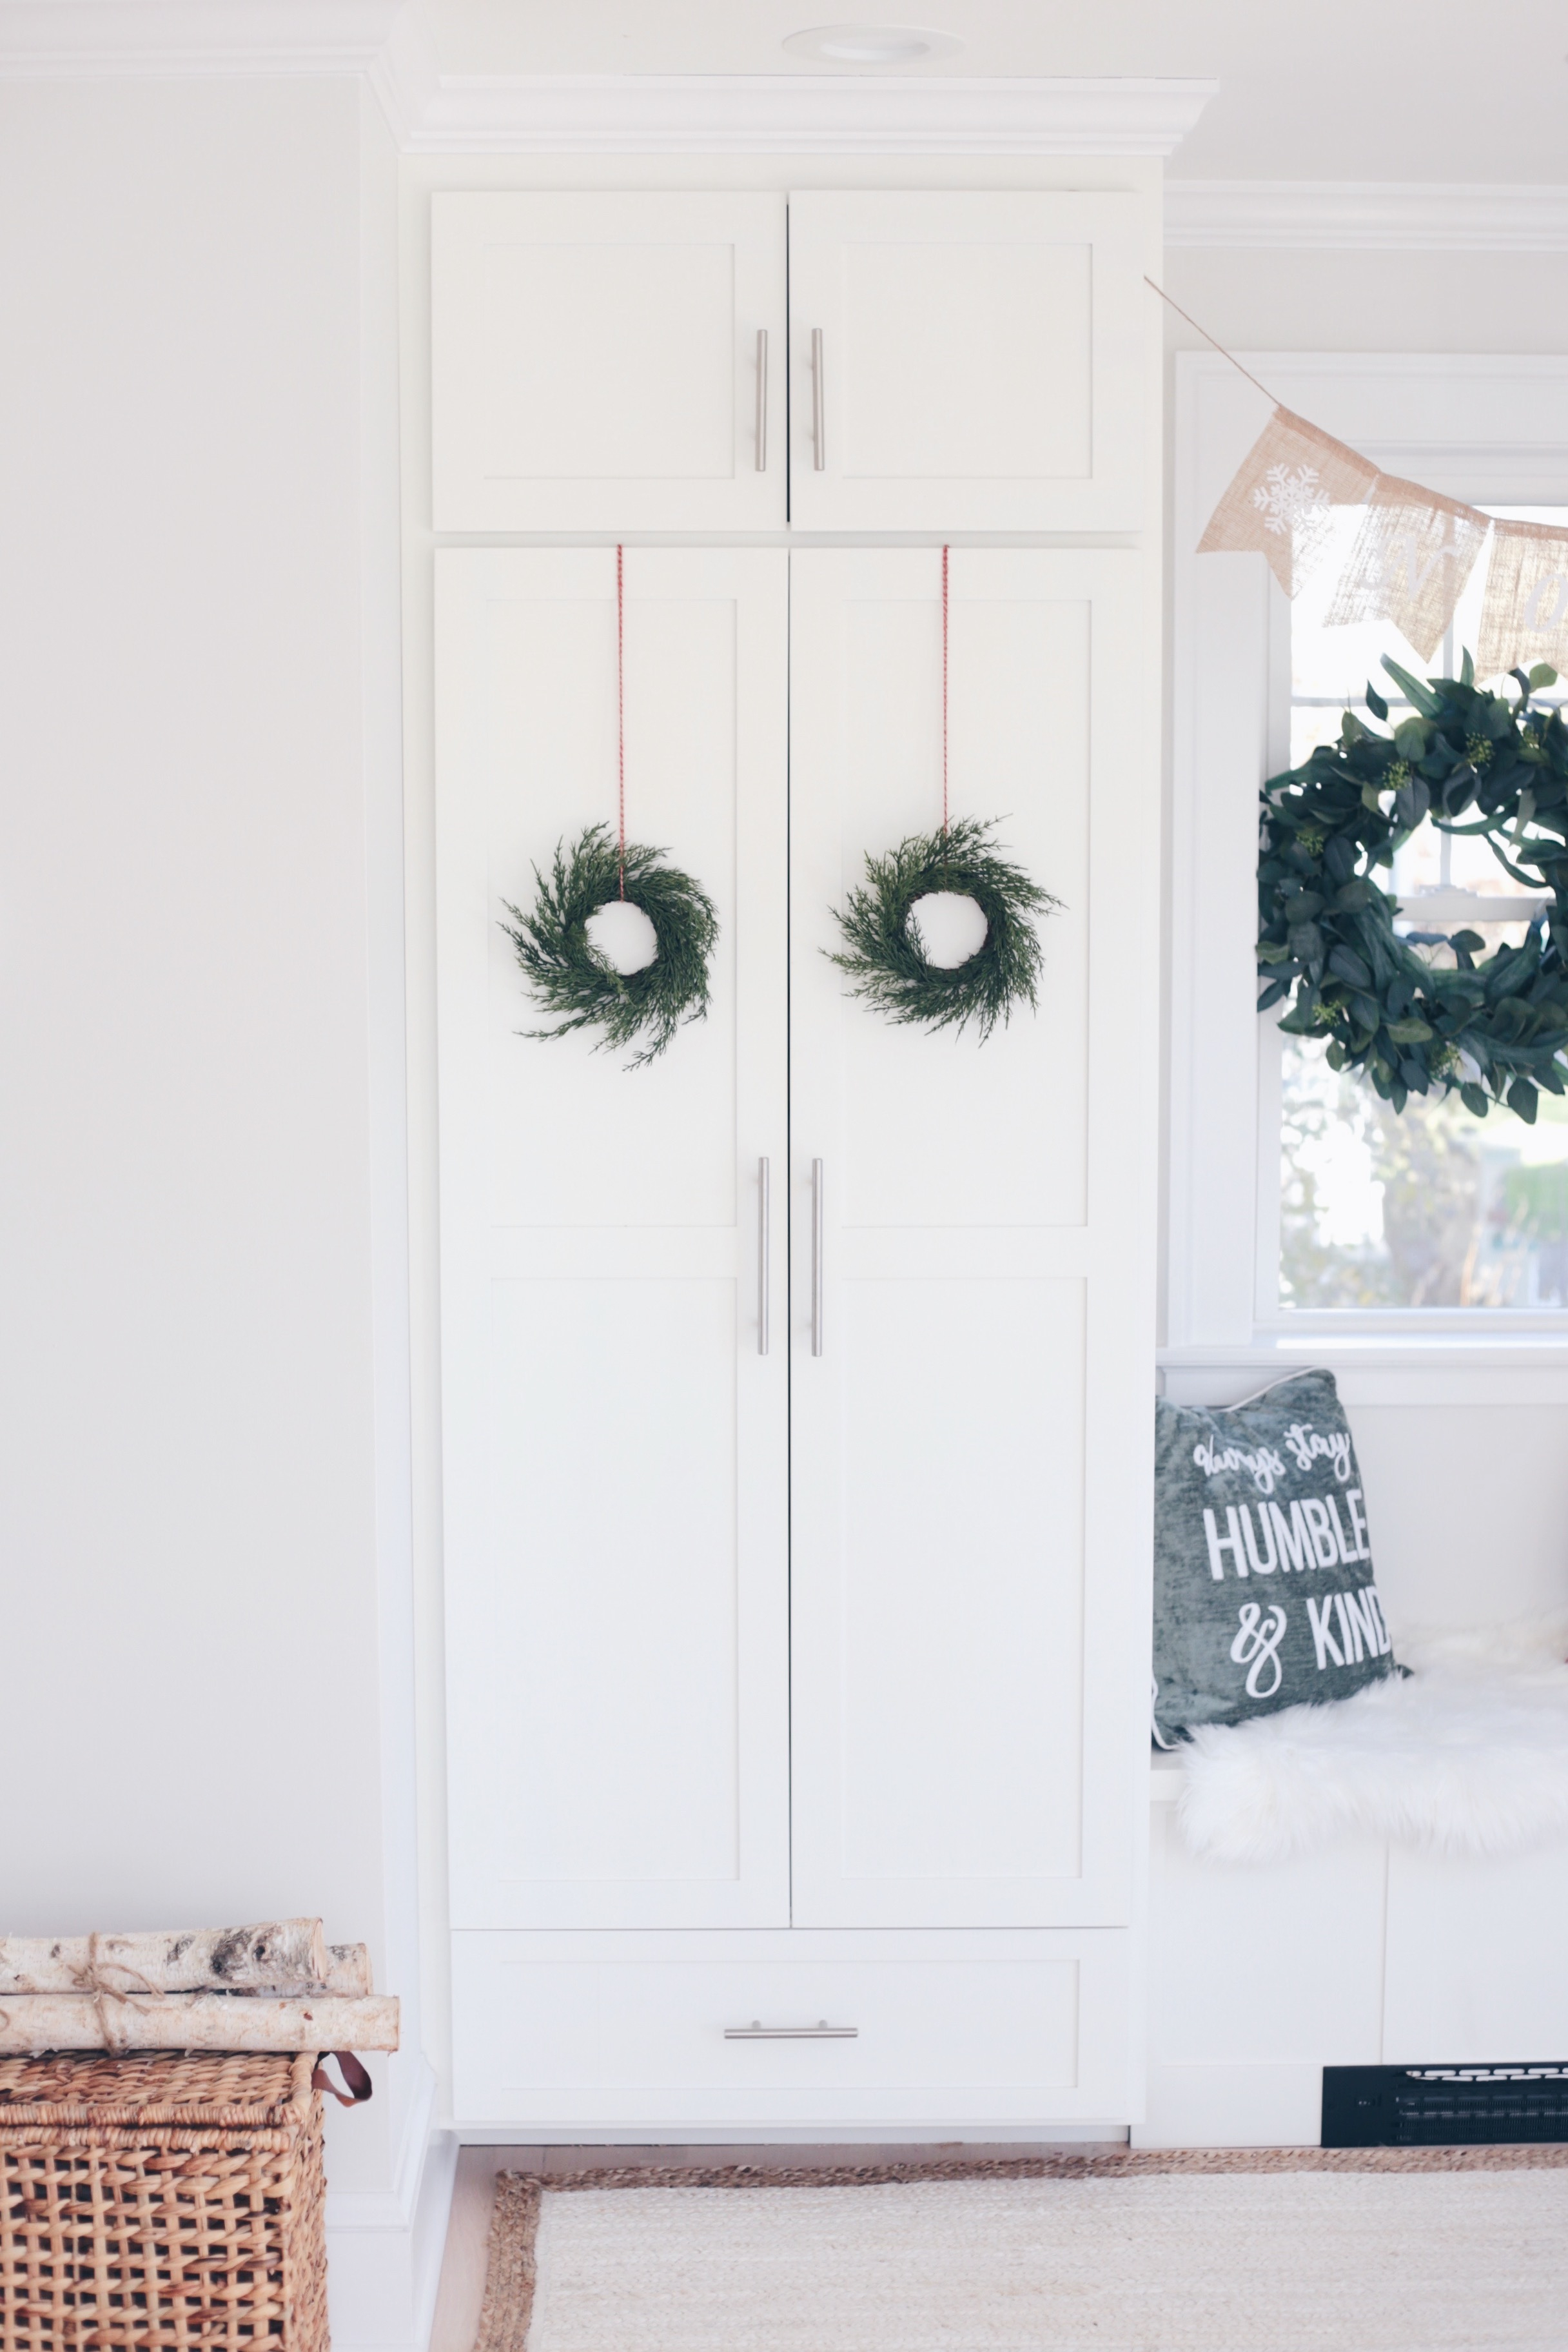  simple holiday mudroom decor - wreaths on white shaker doors on pinteresting plans blog